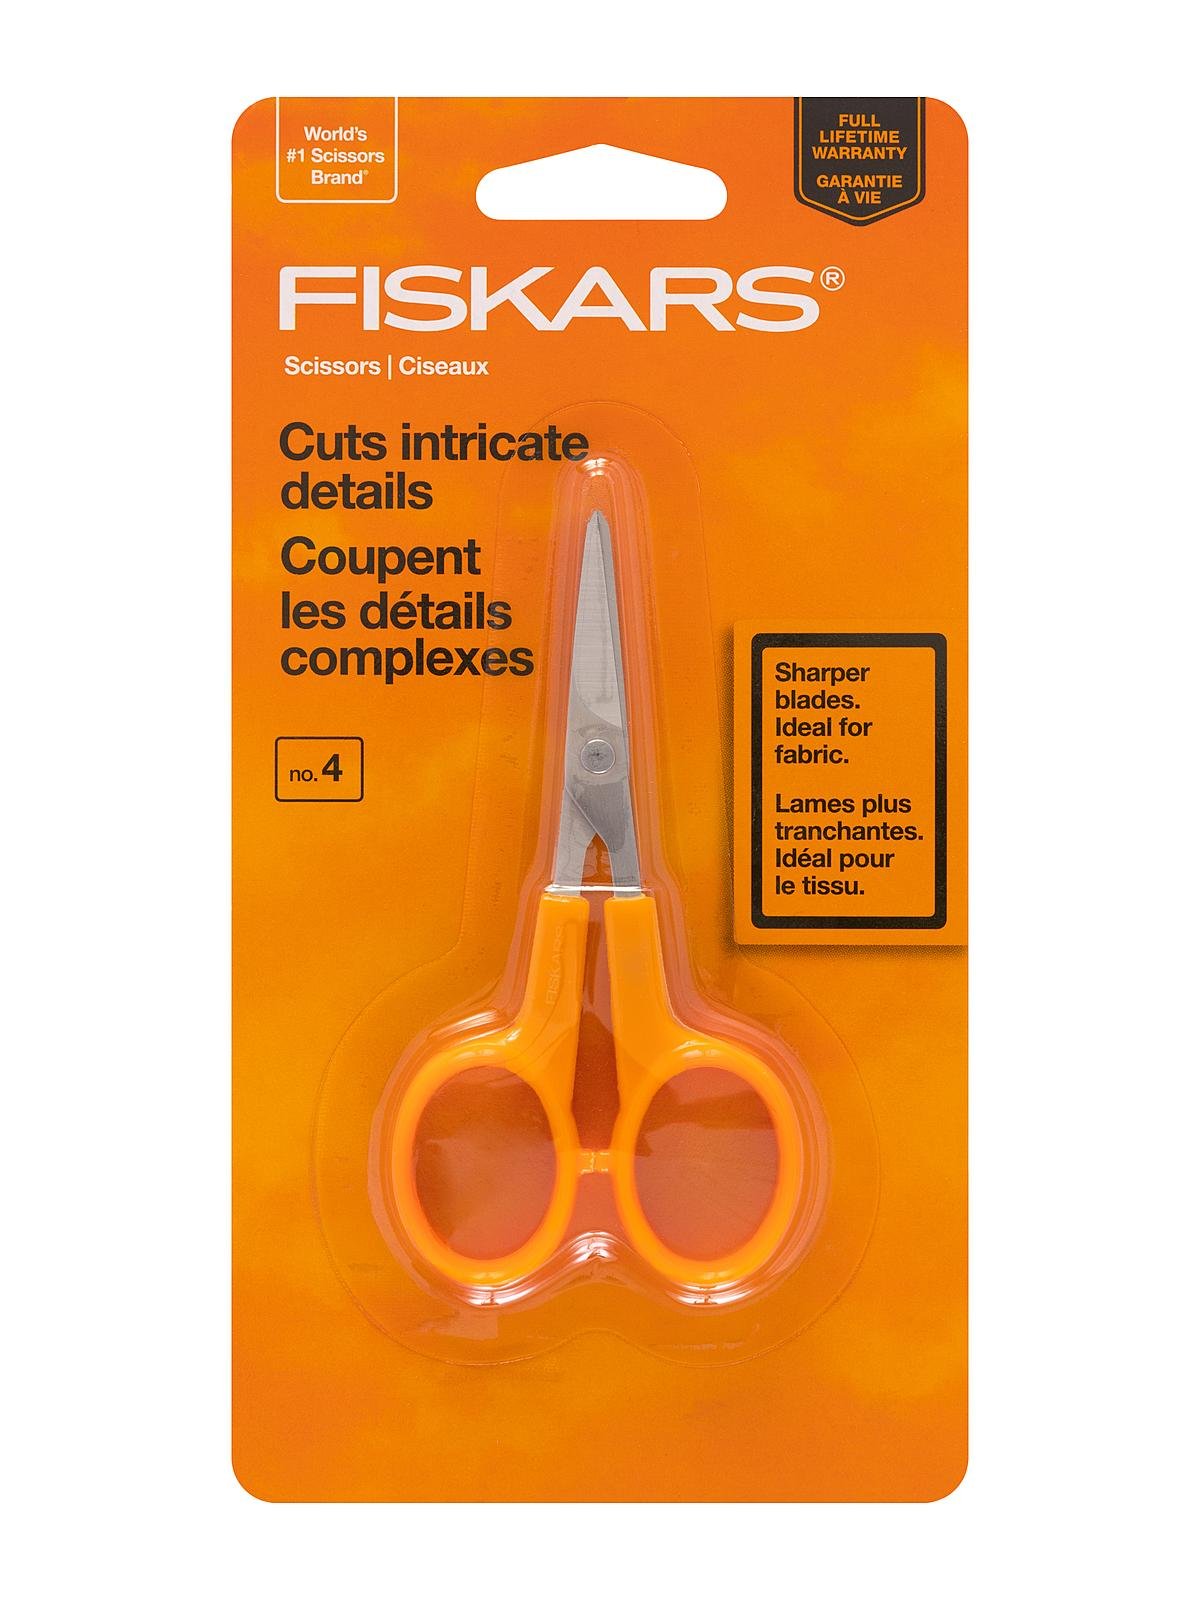 Fiskars Curved EMBROIDERY Scissors